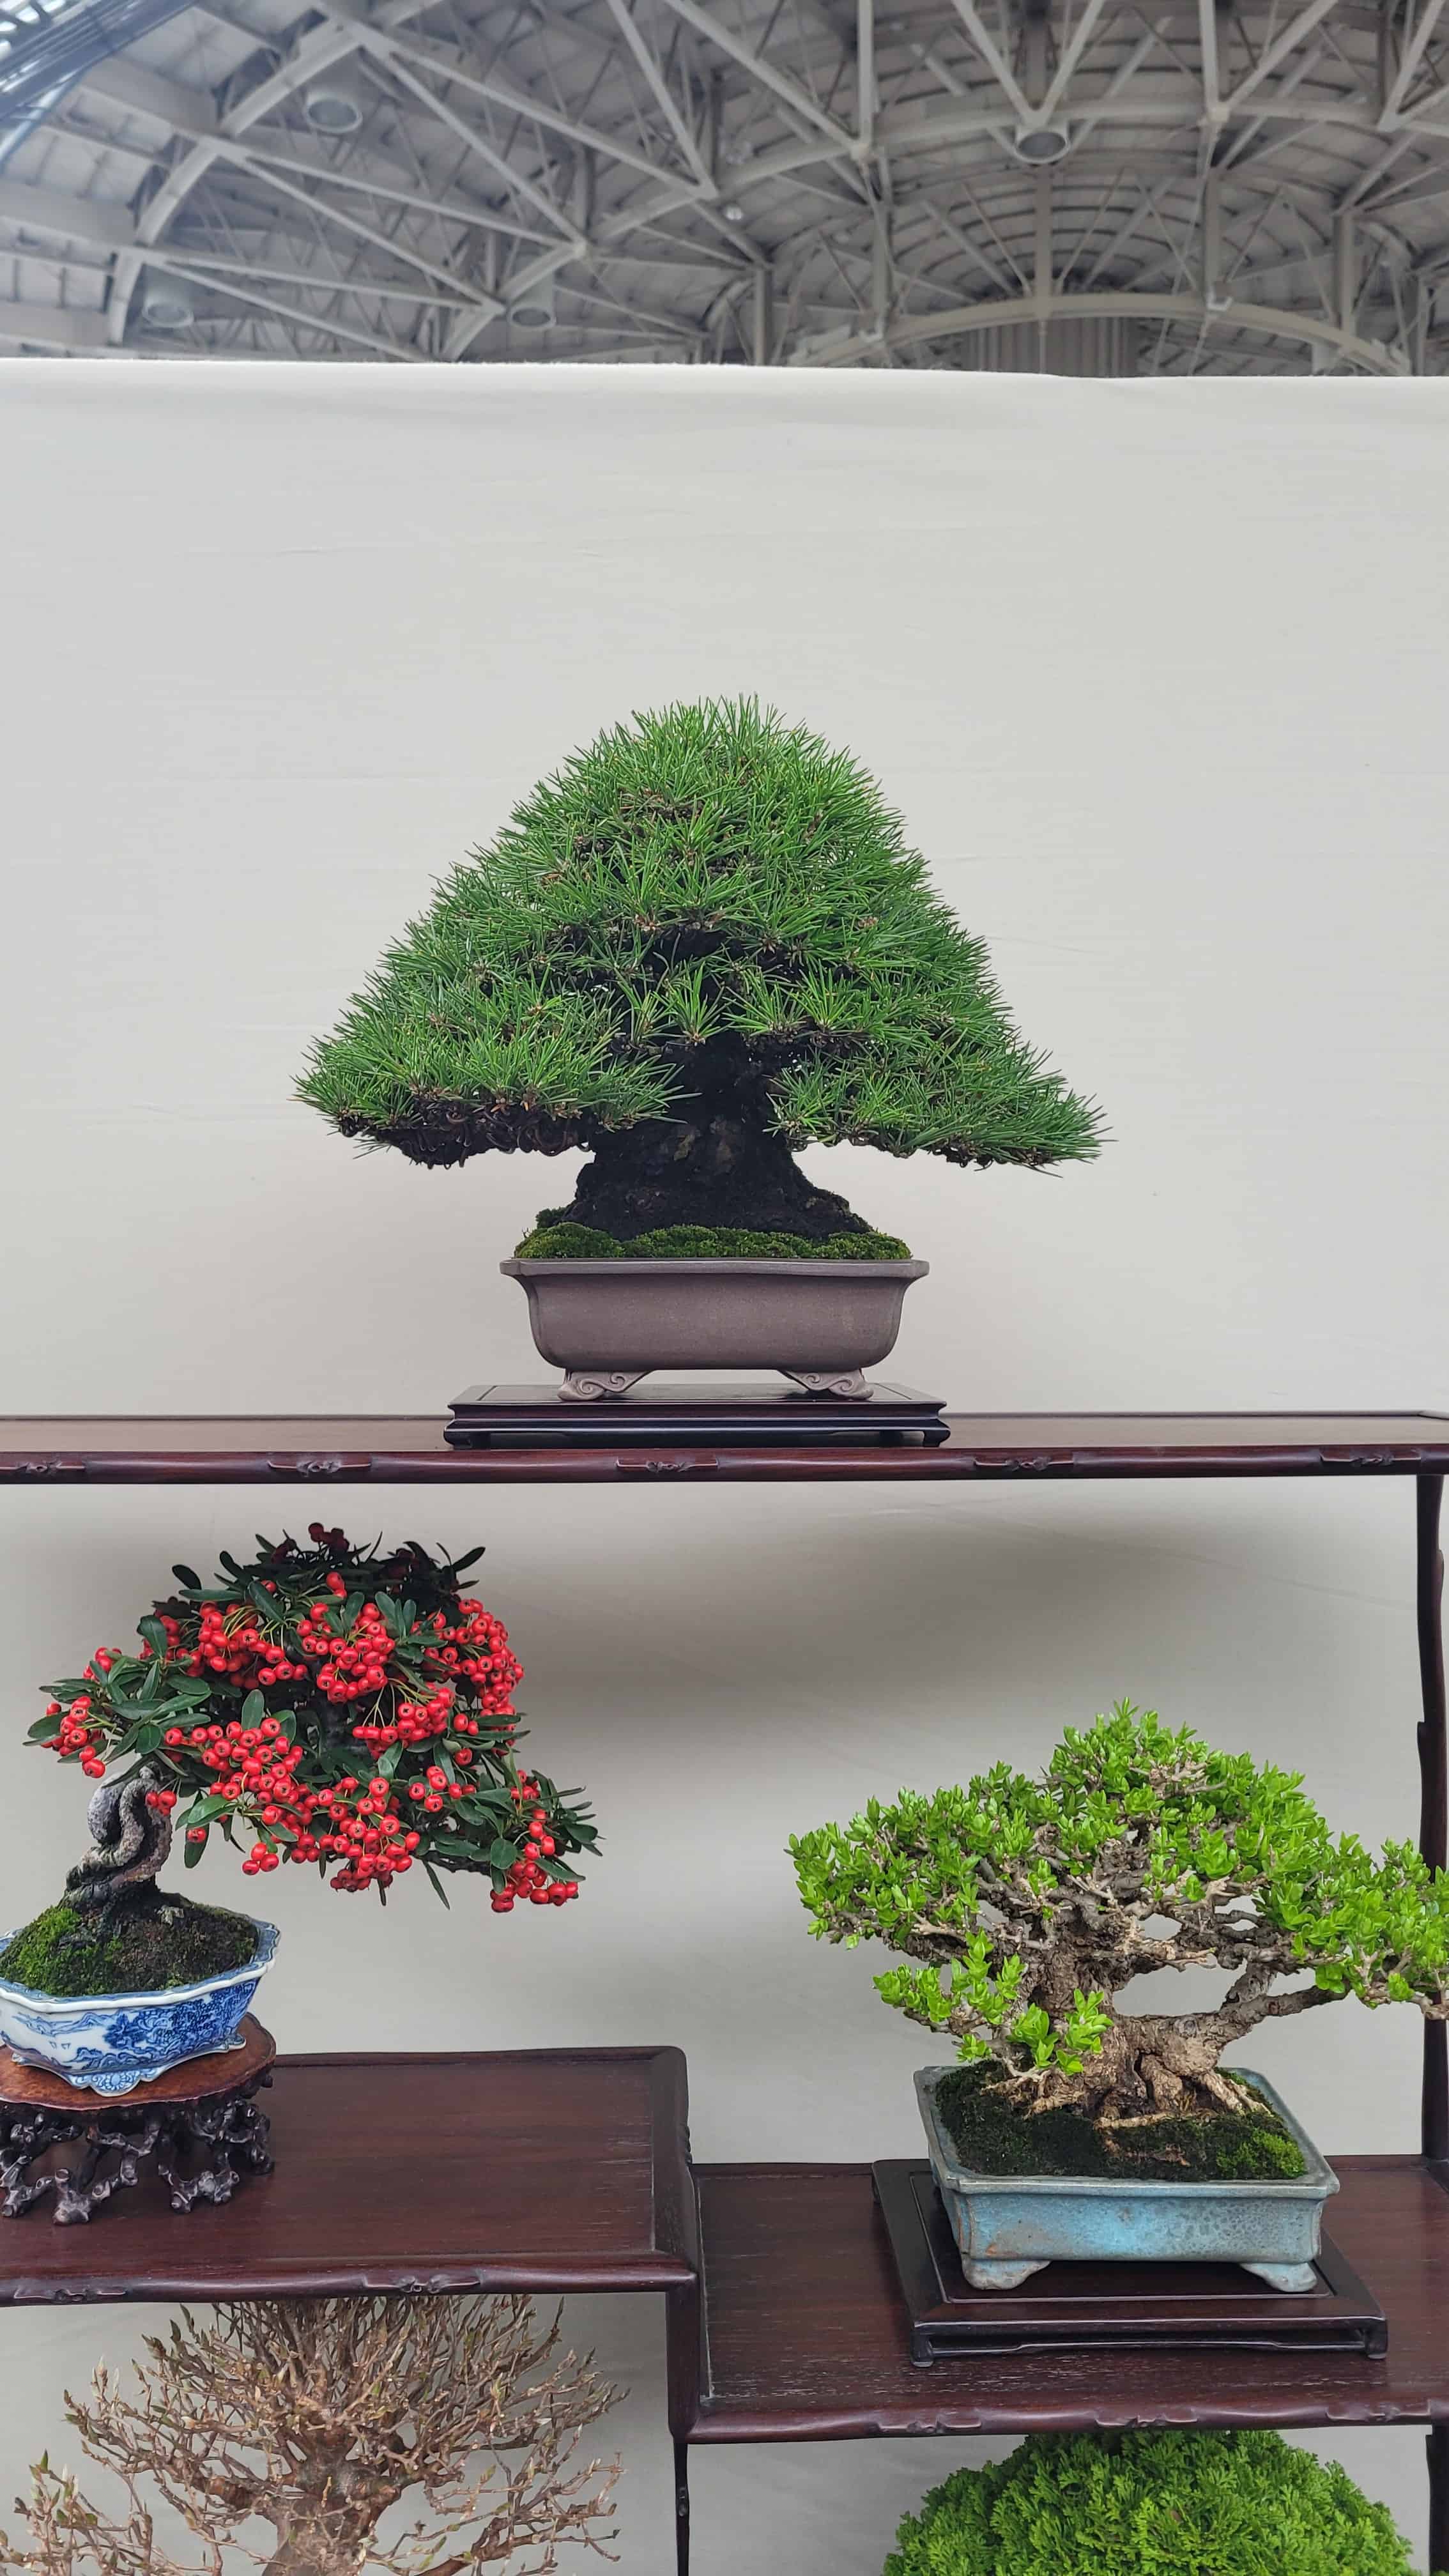 A pine bonsai tree from osaka show in Japan